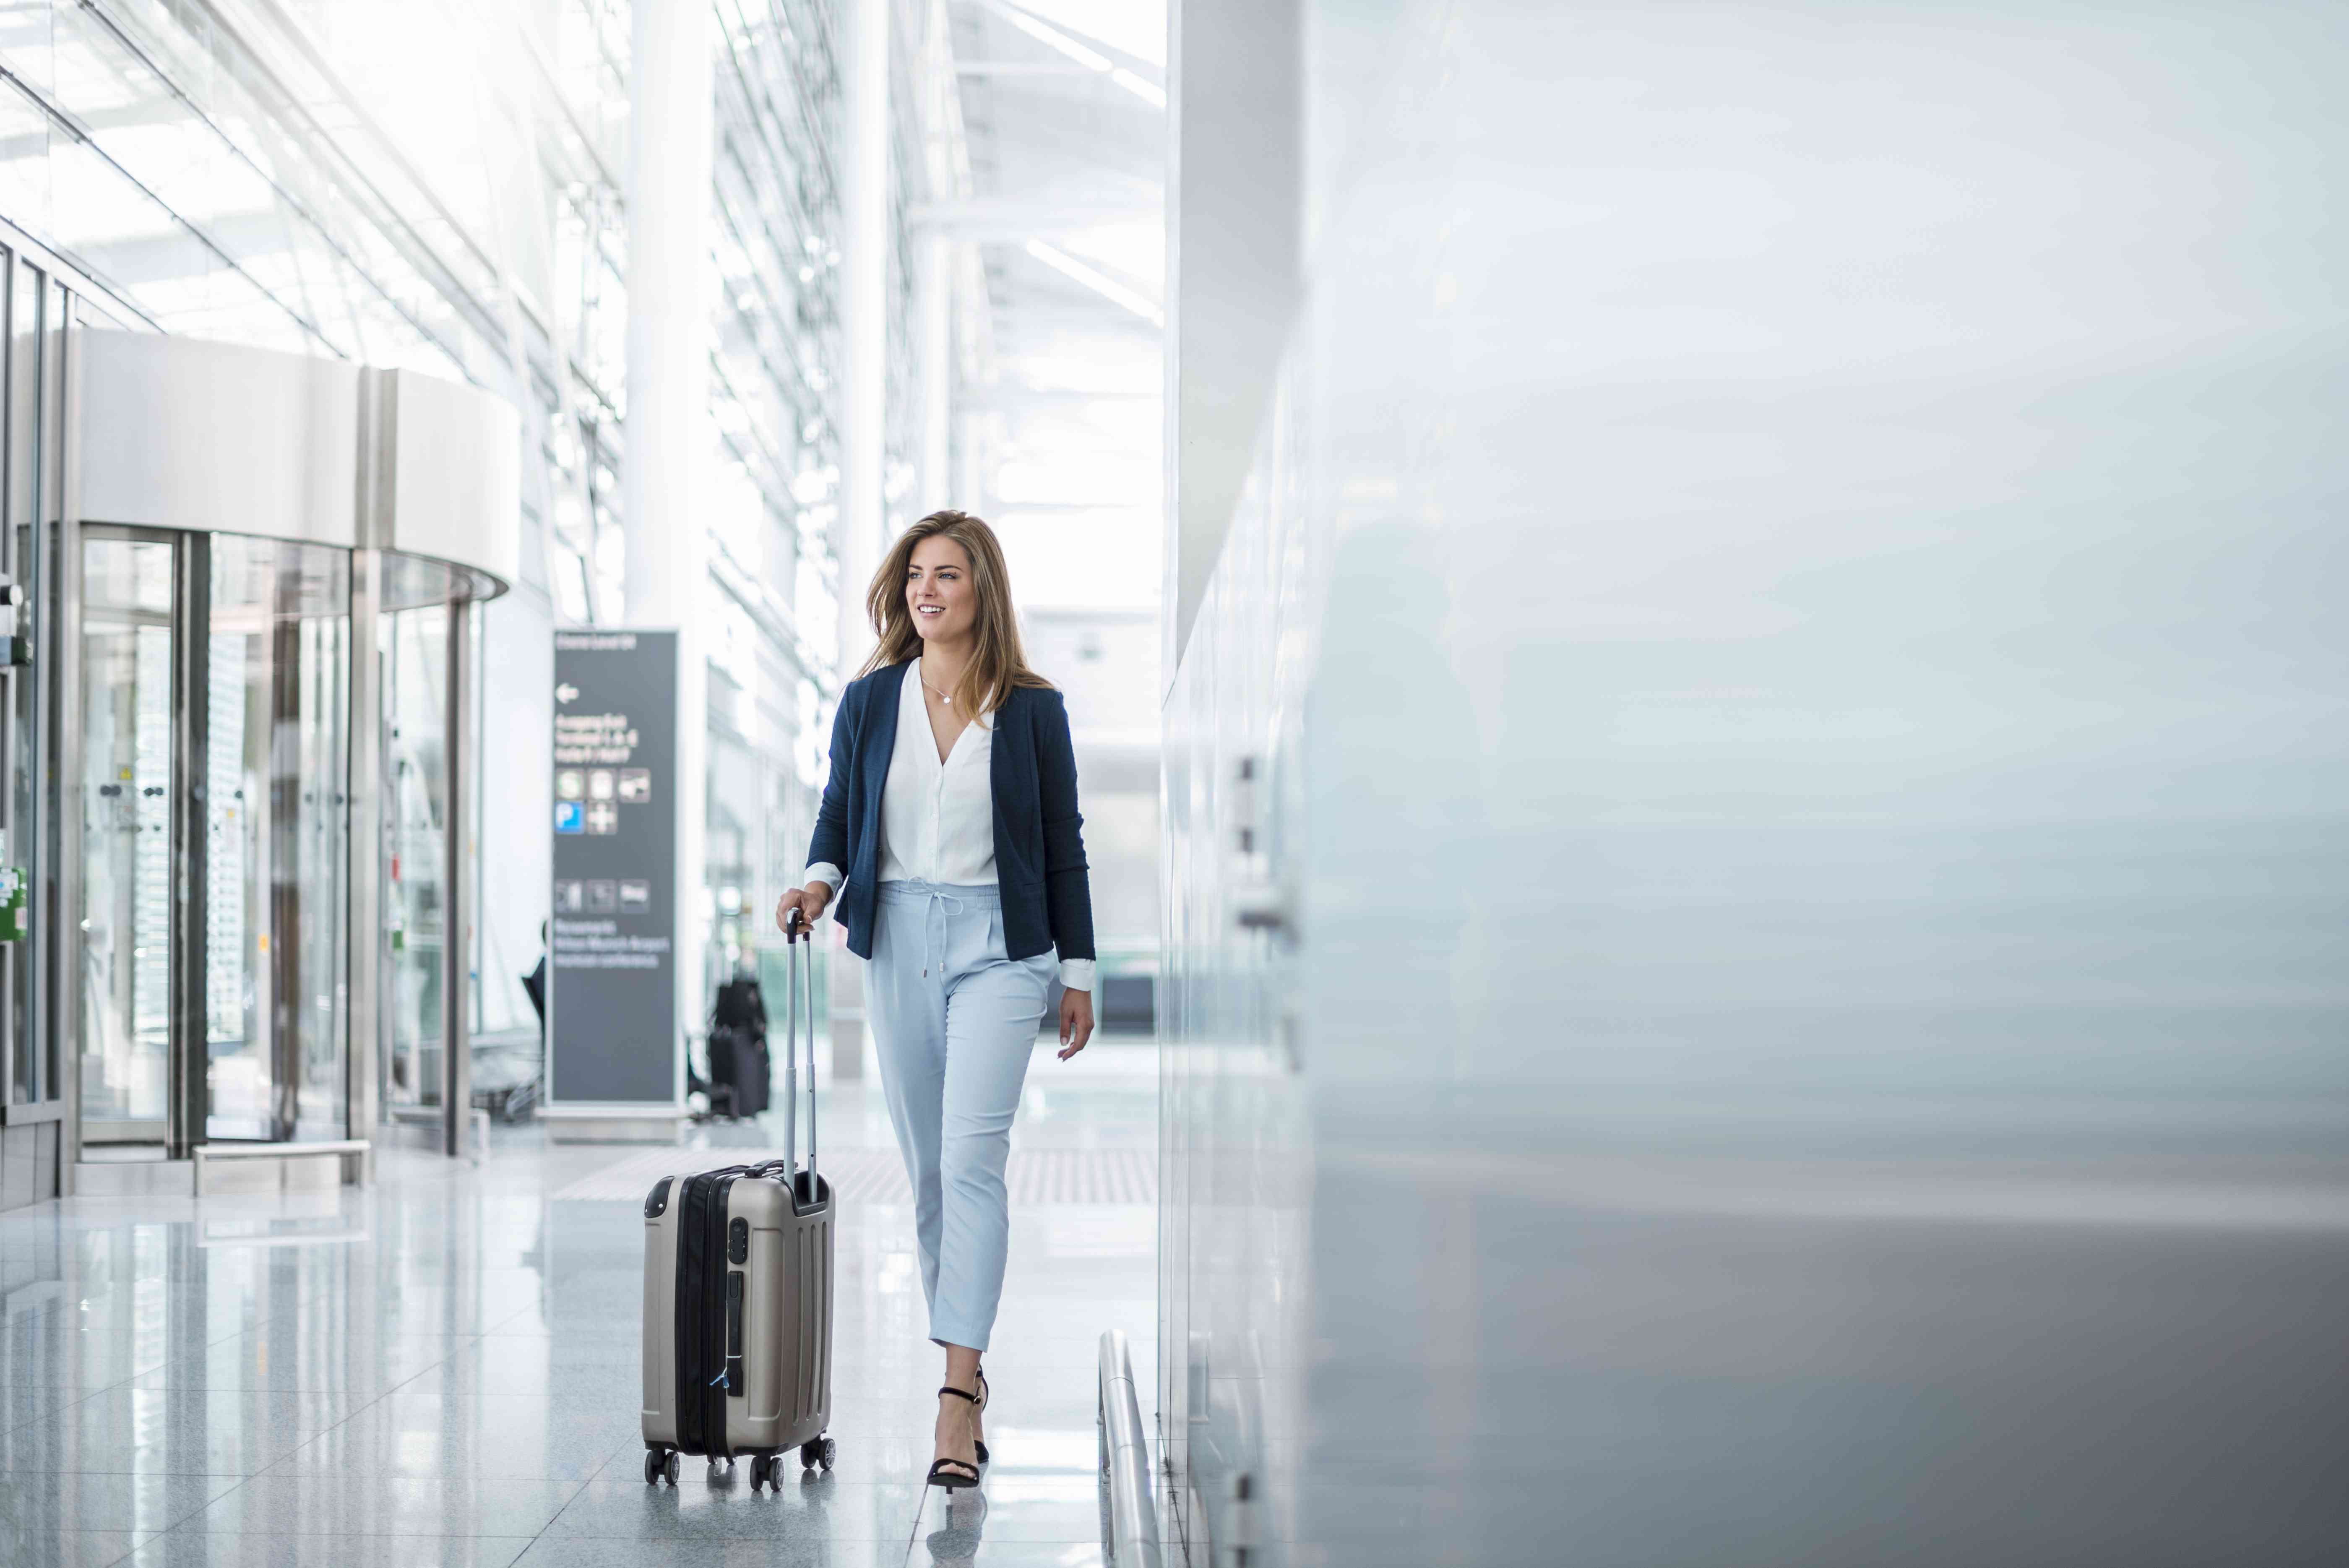 A woman traveler in an airport